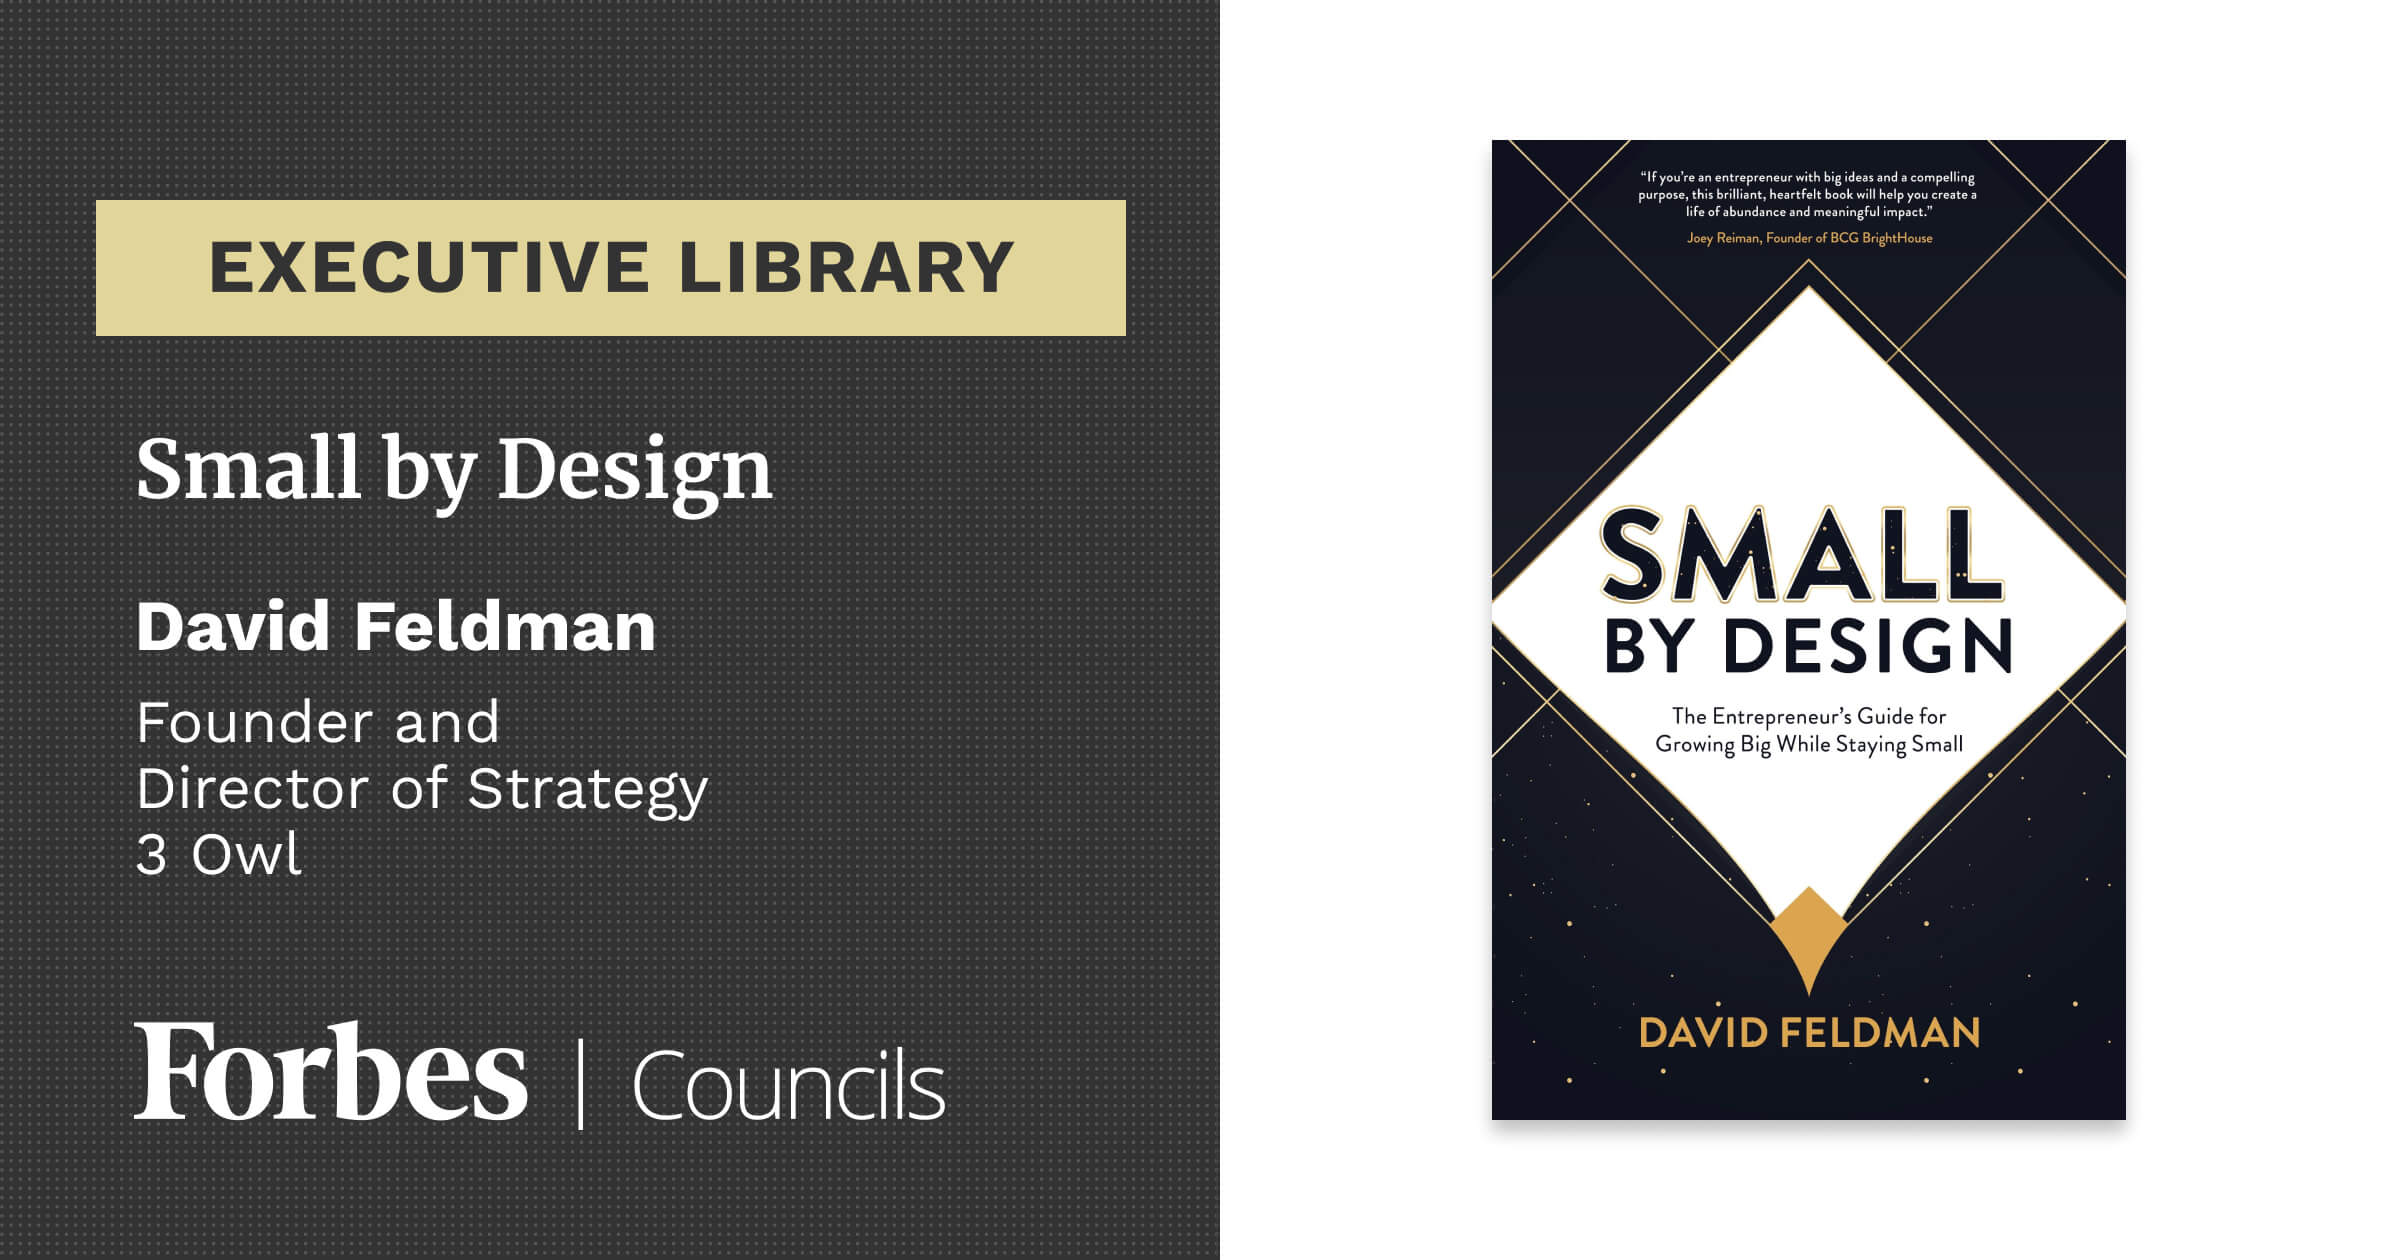 Small by Design by David Feldman